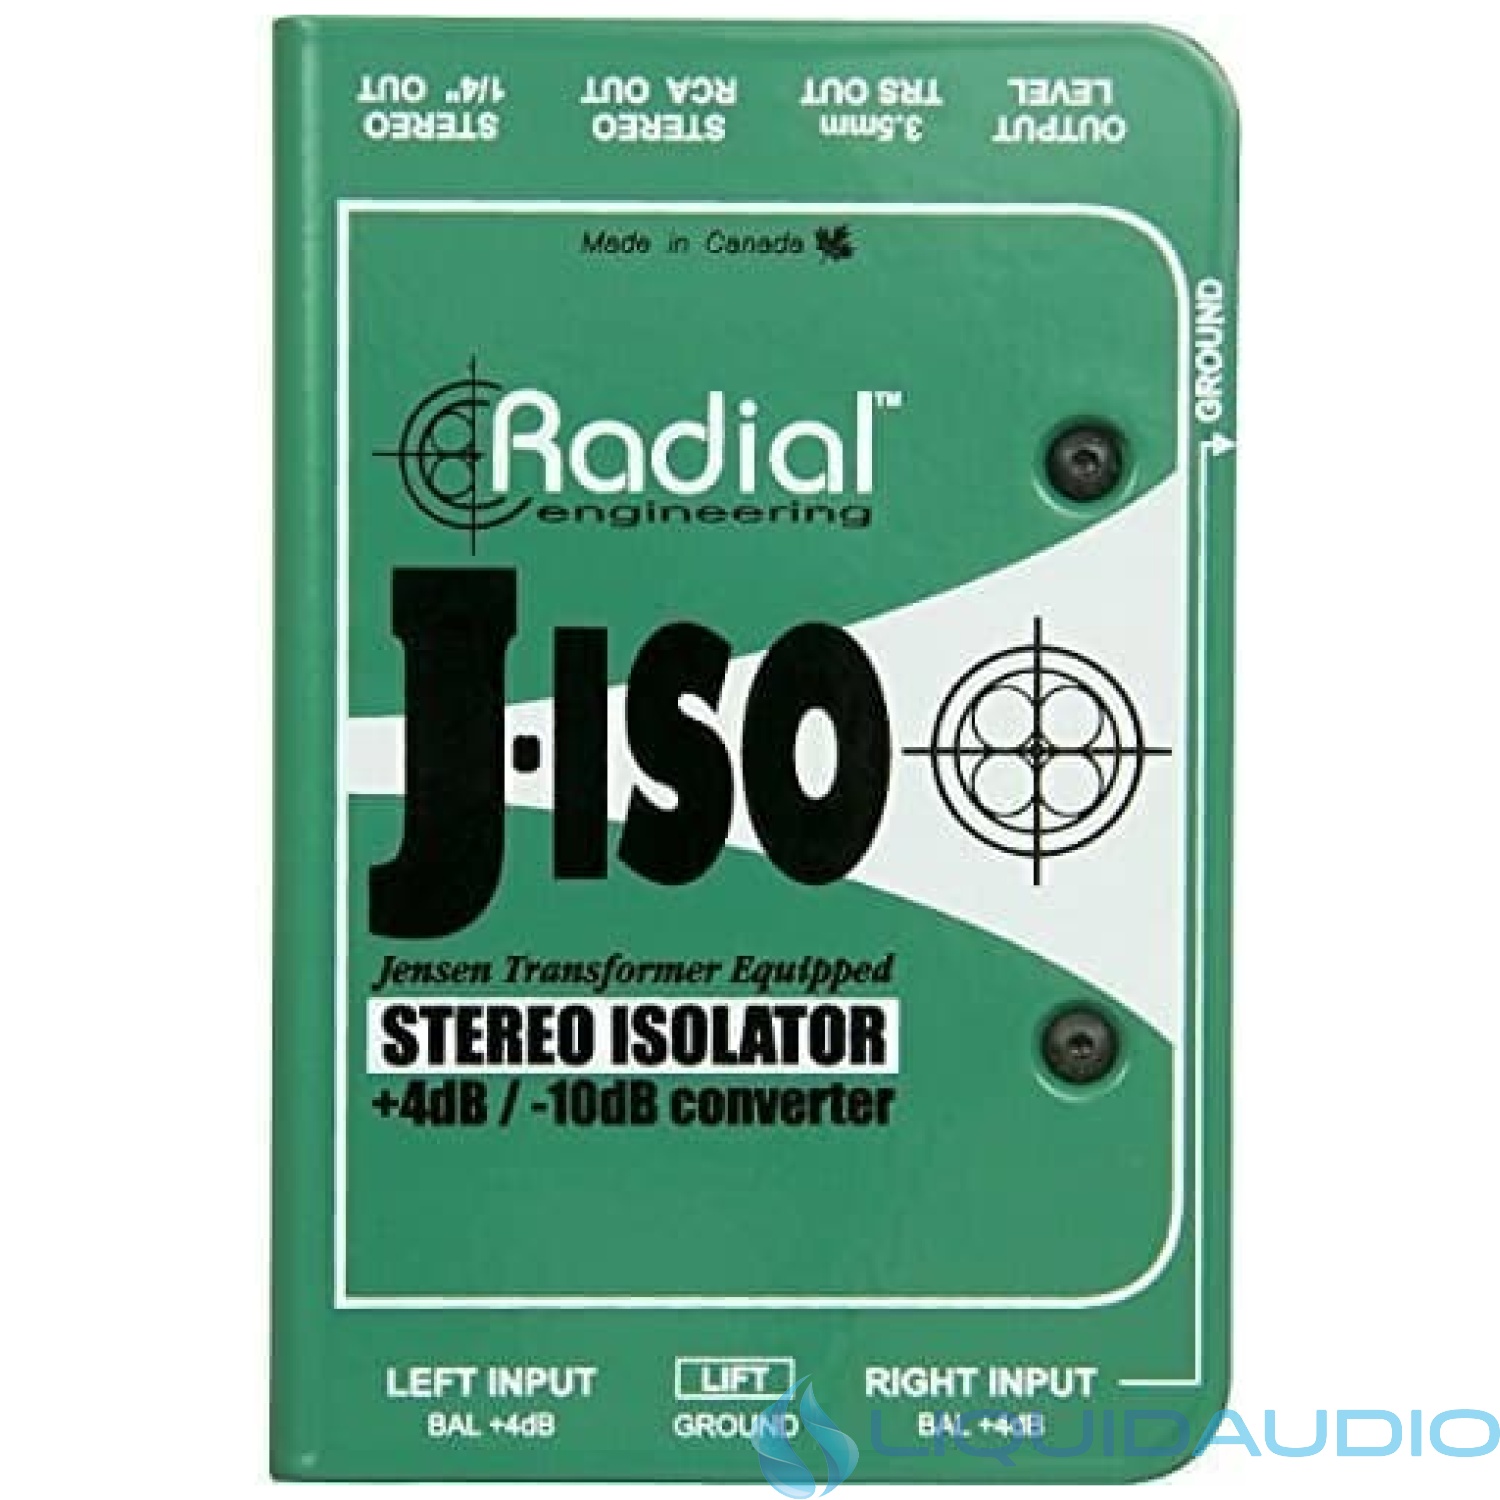 Radial Engineering J-ISO Jensen Transformer Equipped Stereo Isolator +4dB to -10dB Converter